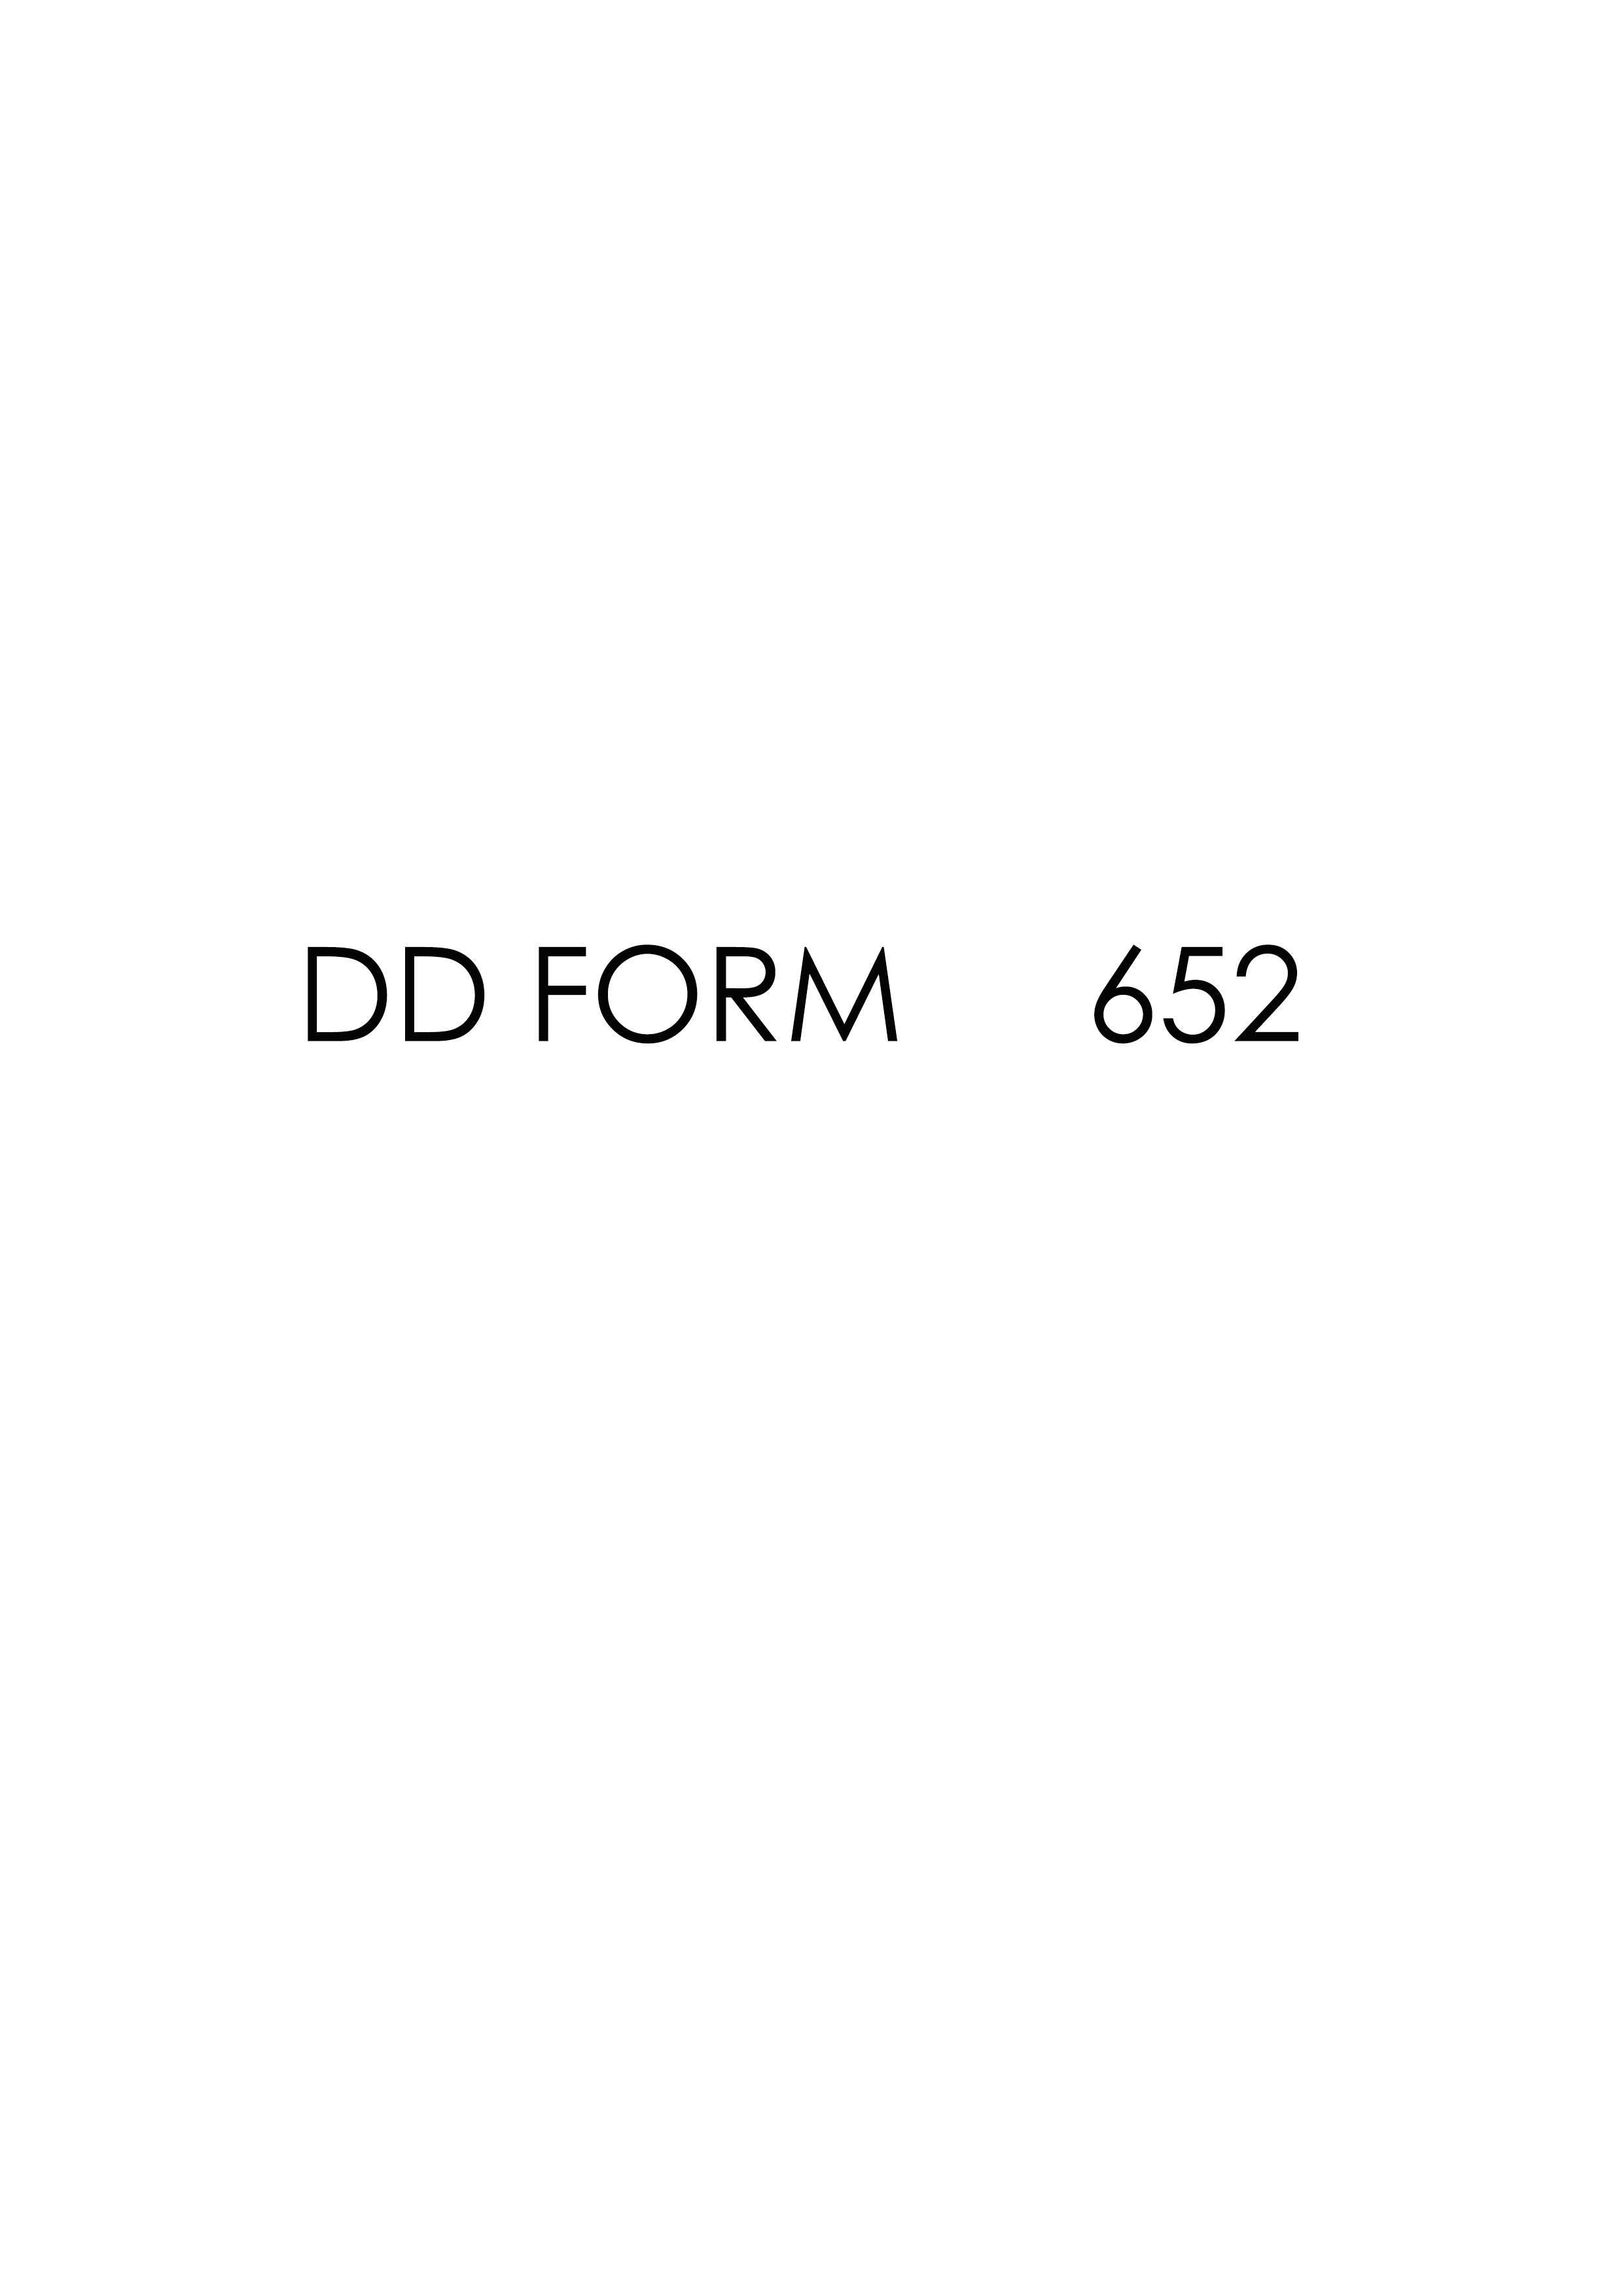 Download dd 652 Form